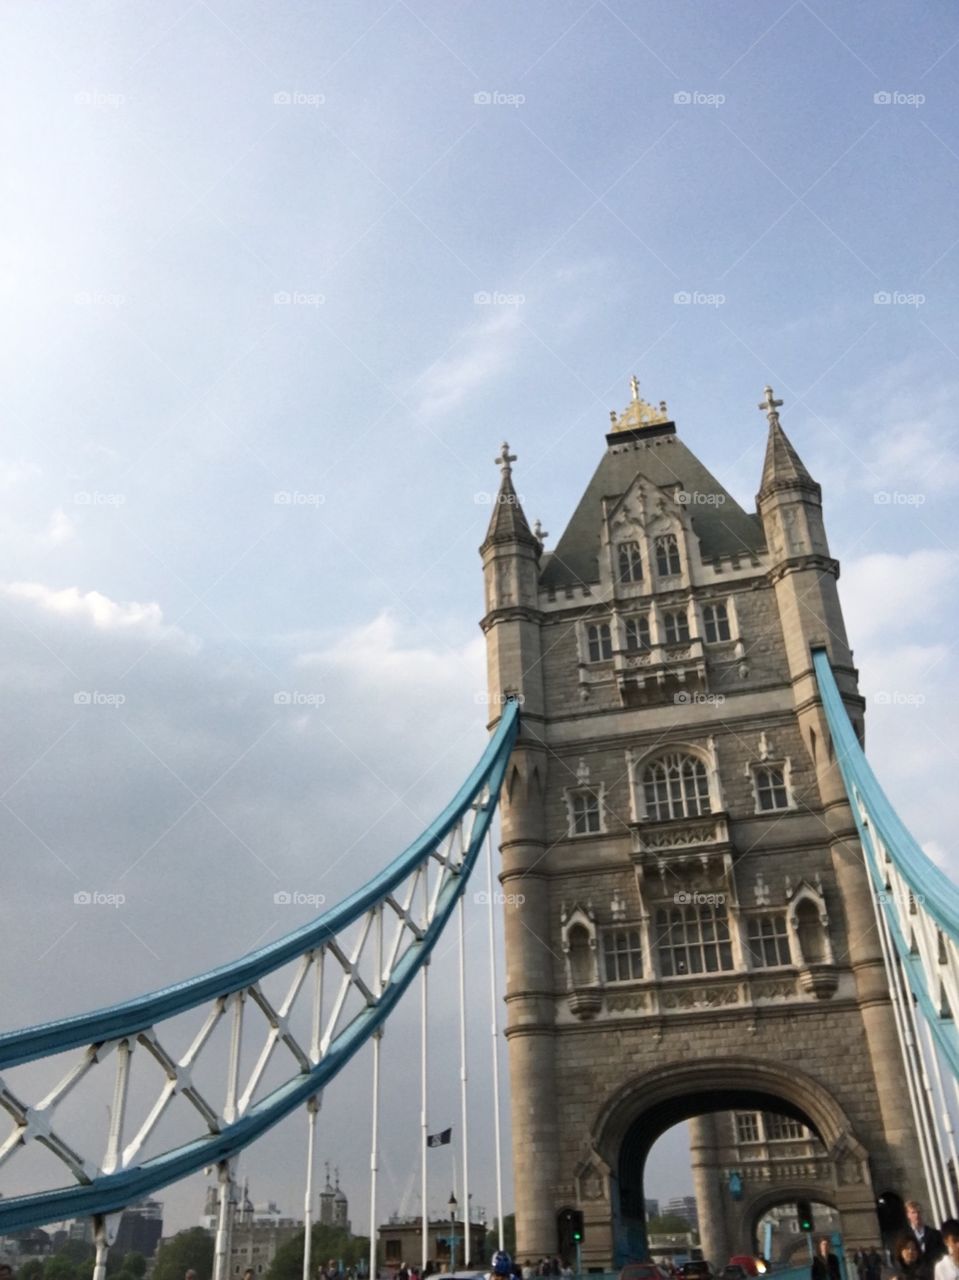 Puente de Londres
